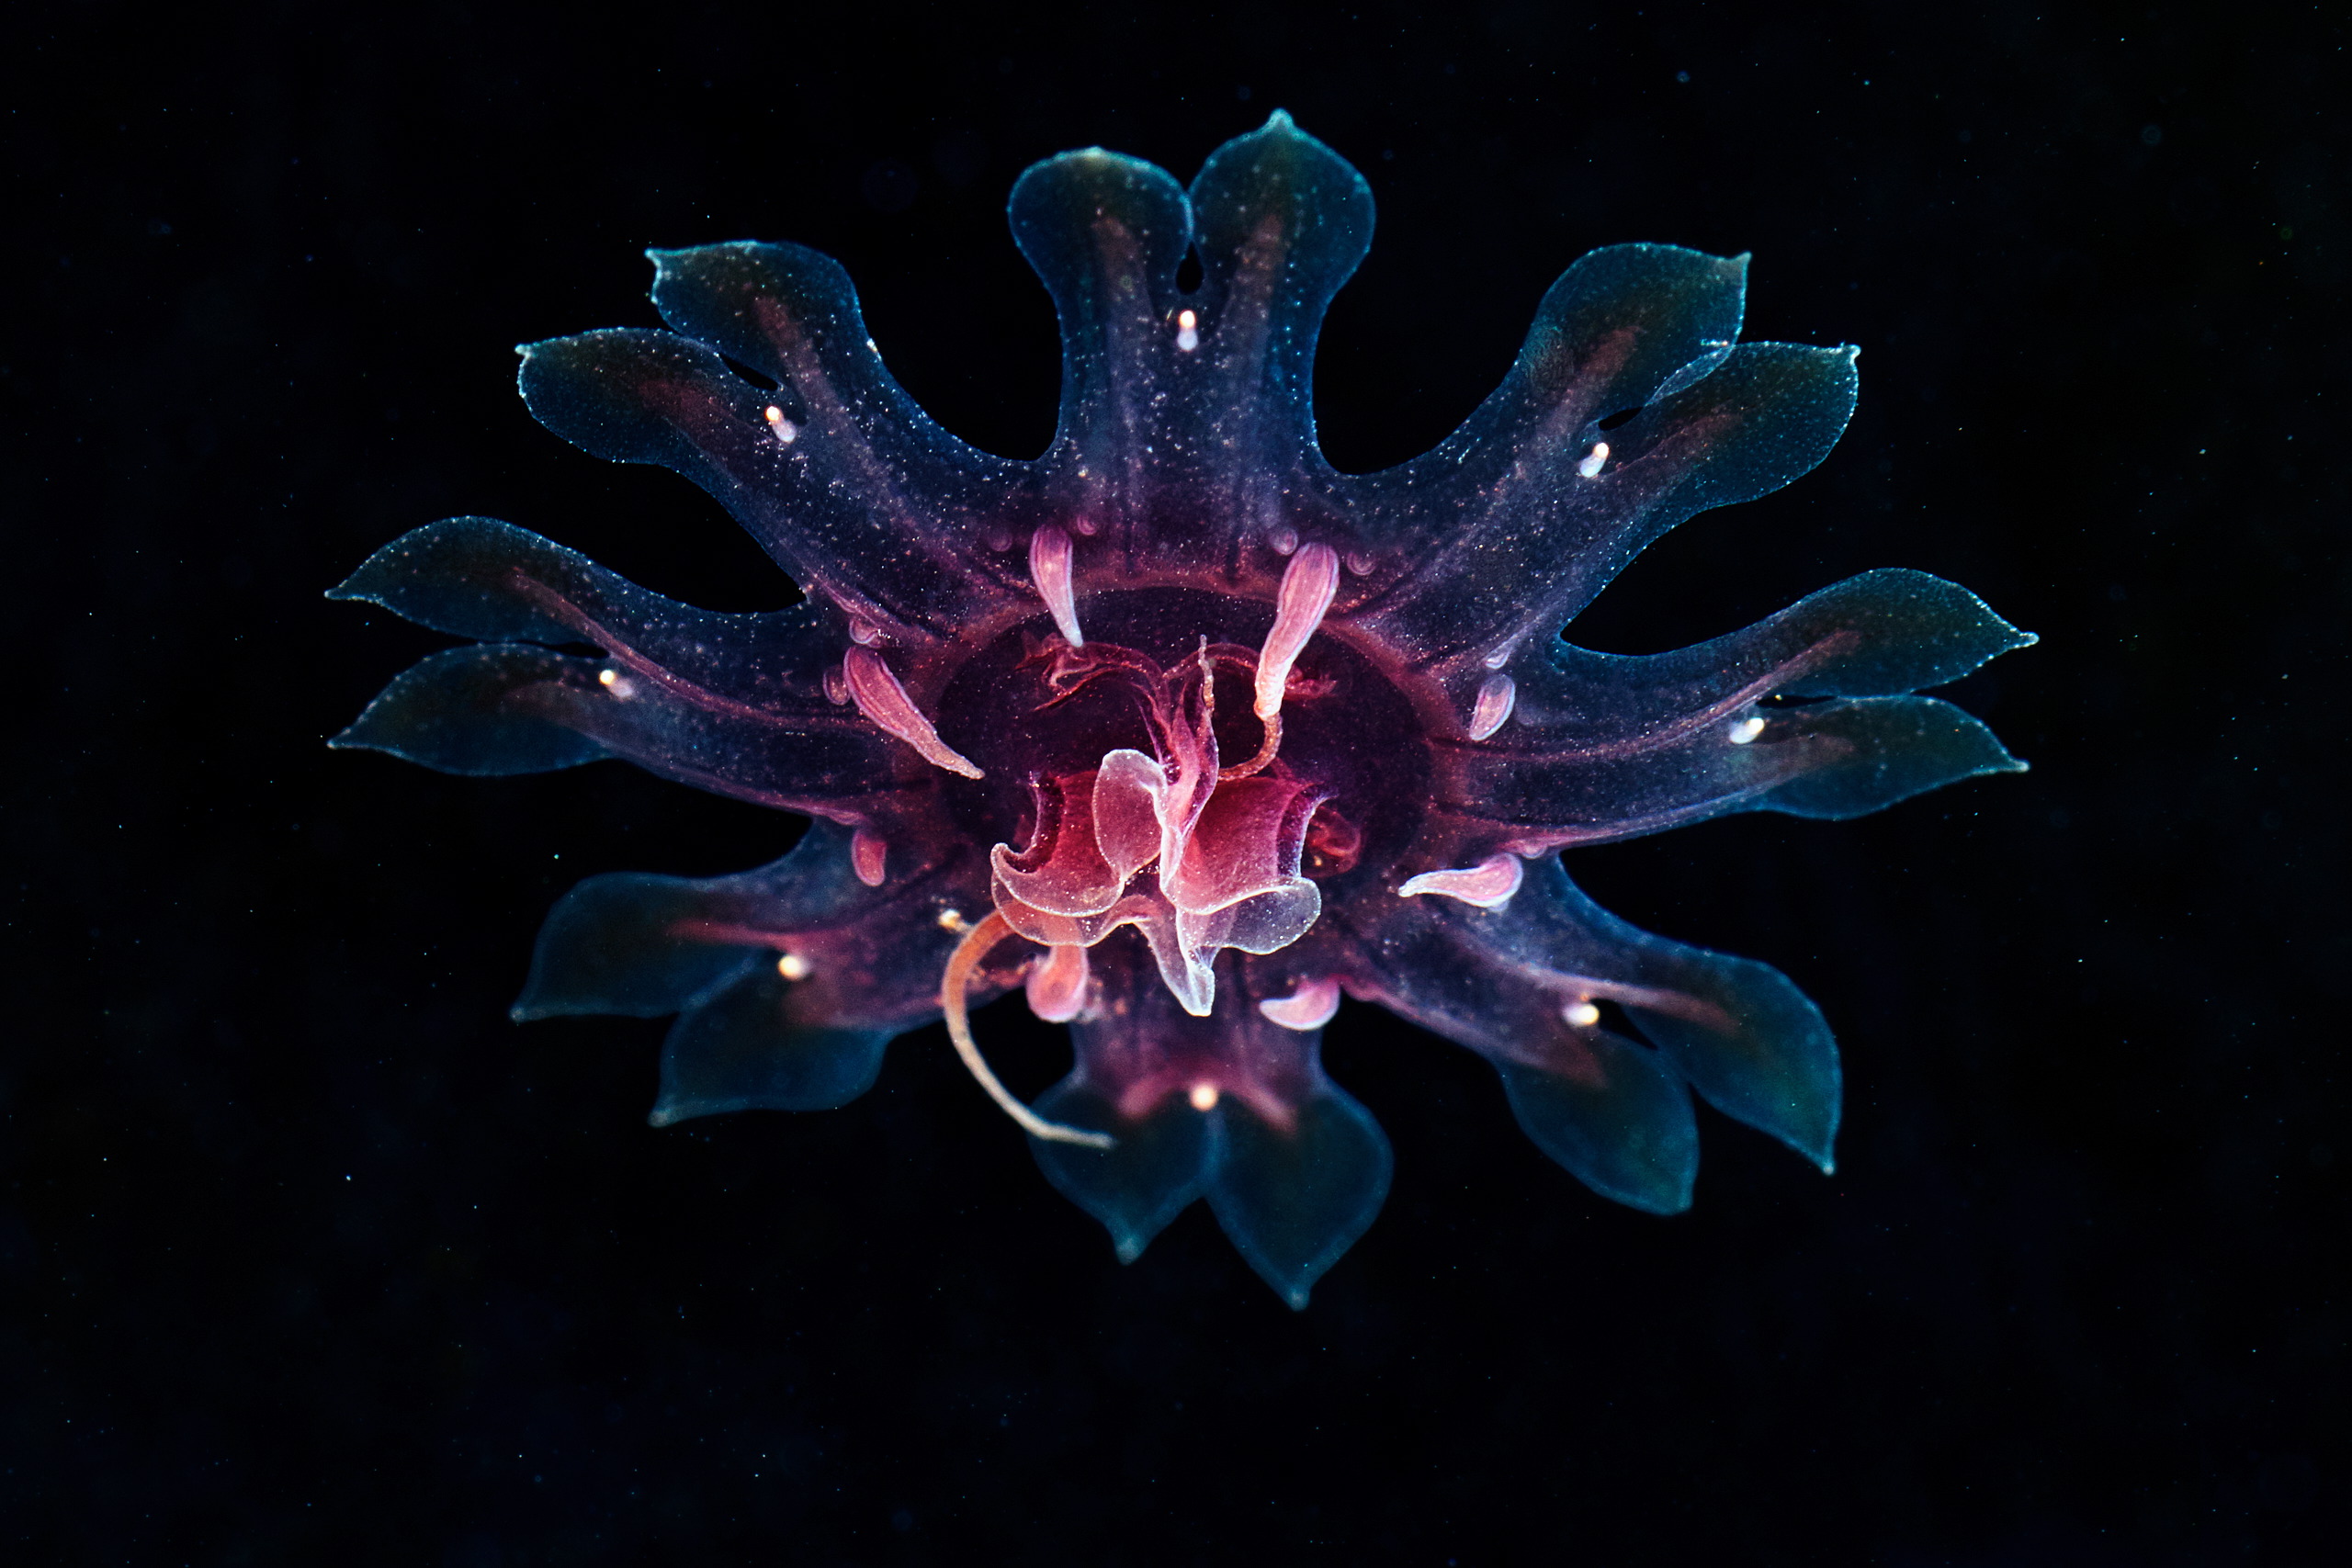 Scyphozoan jellyfish – Cyanea capillata ephyra